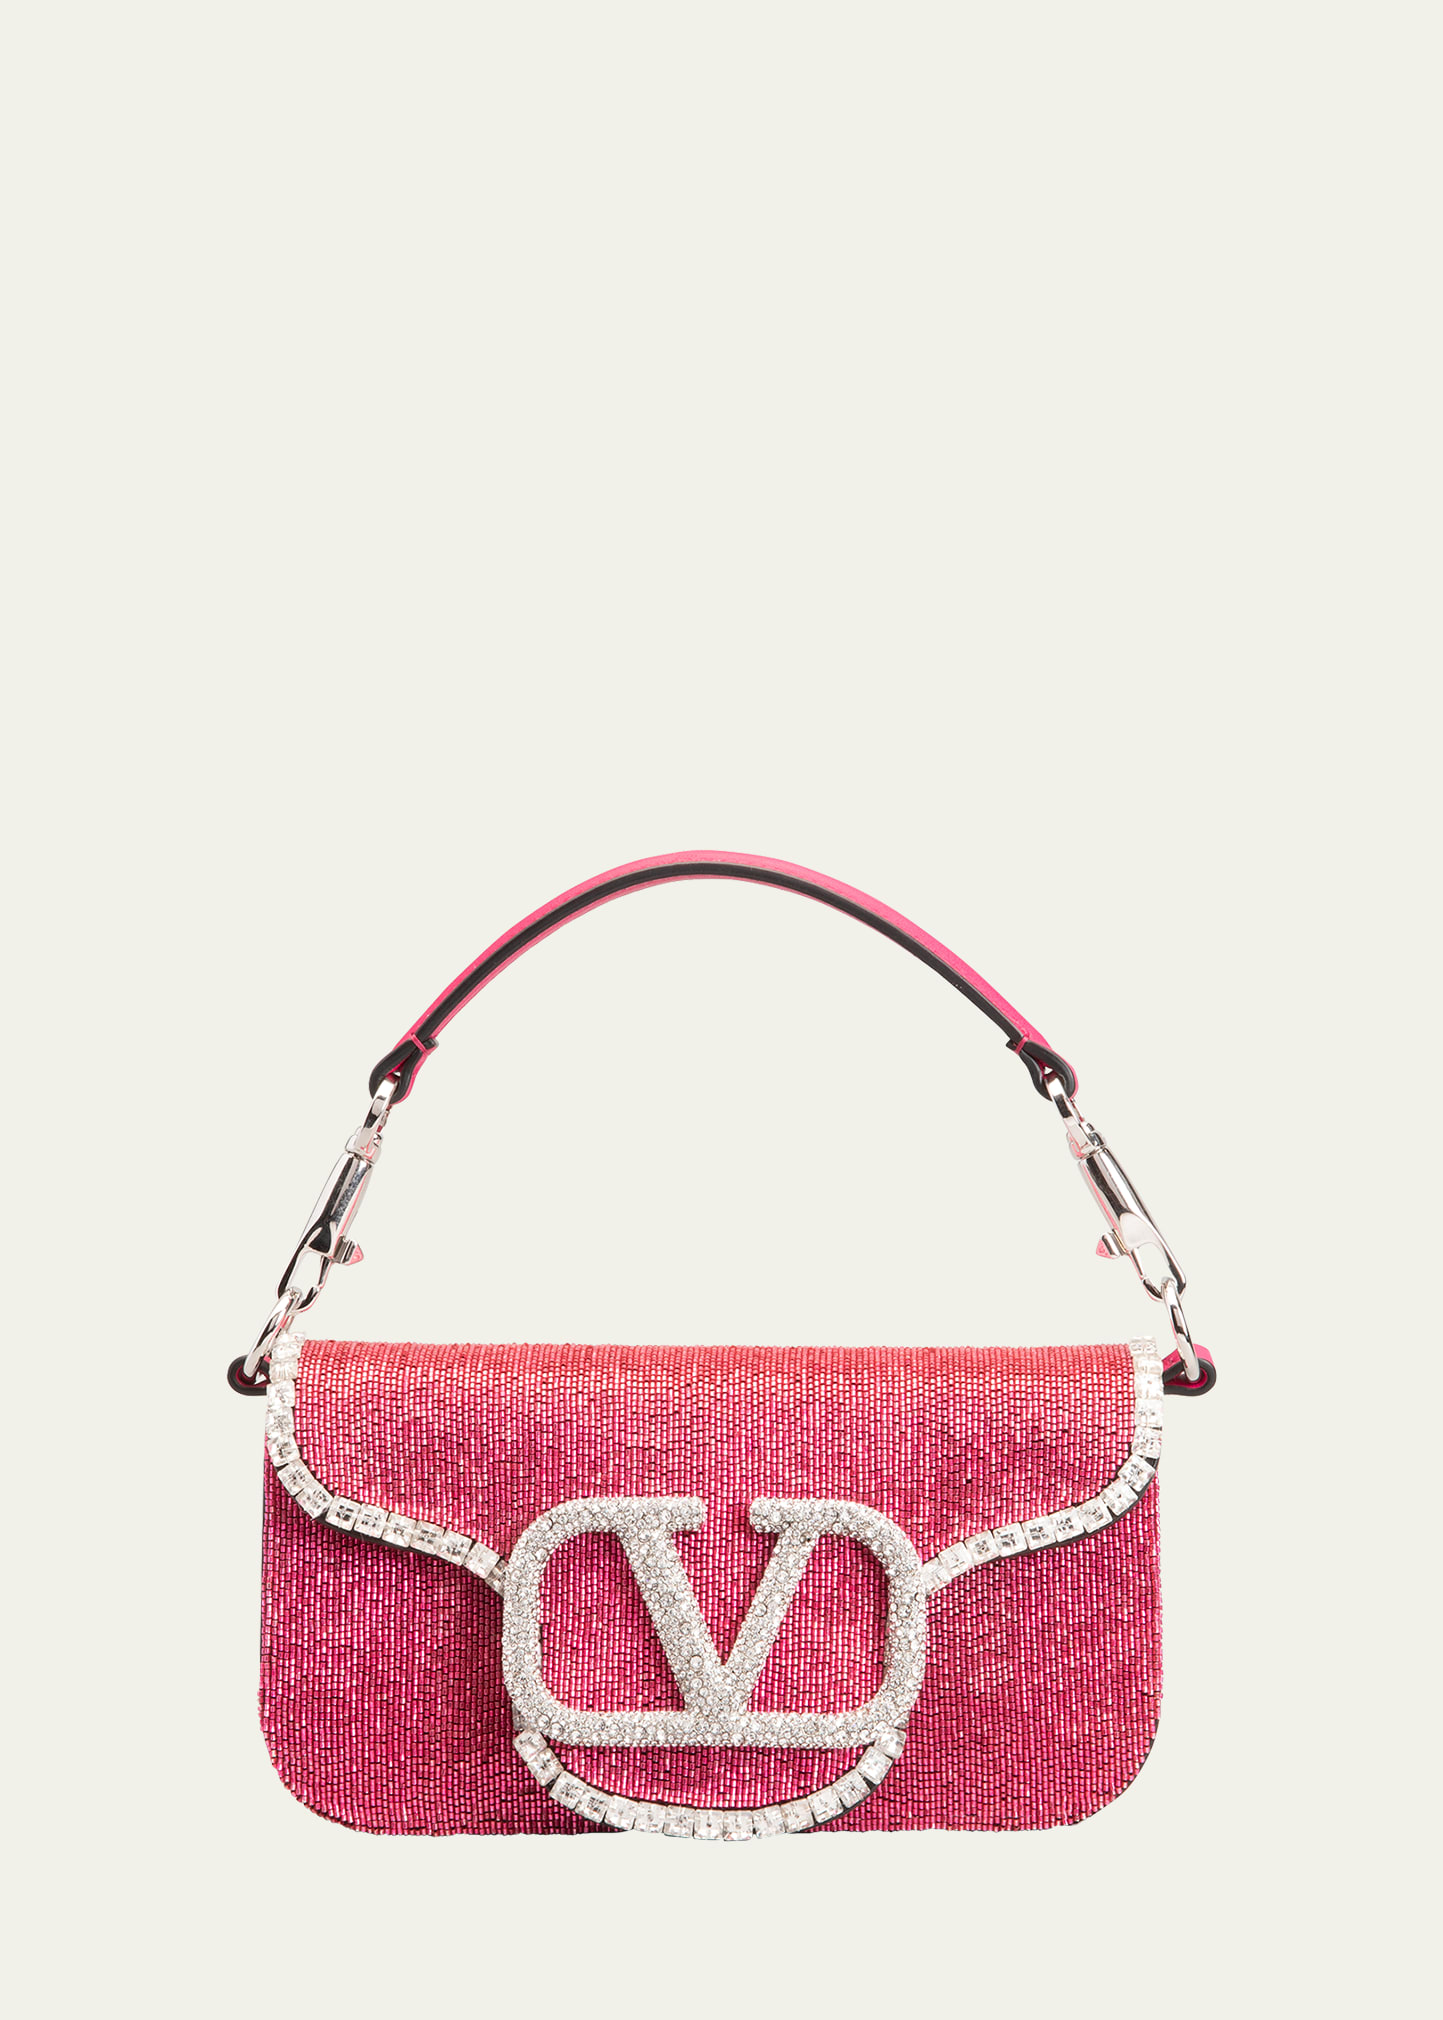 V Sling Micro Embellished Crossbody Bag in Green - Valentino Garavani